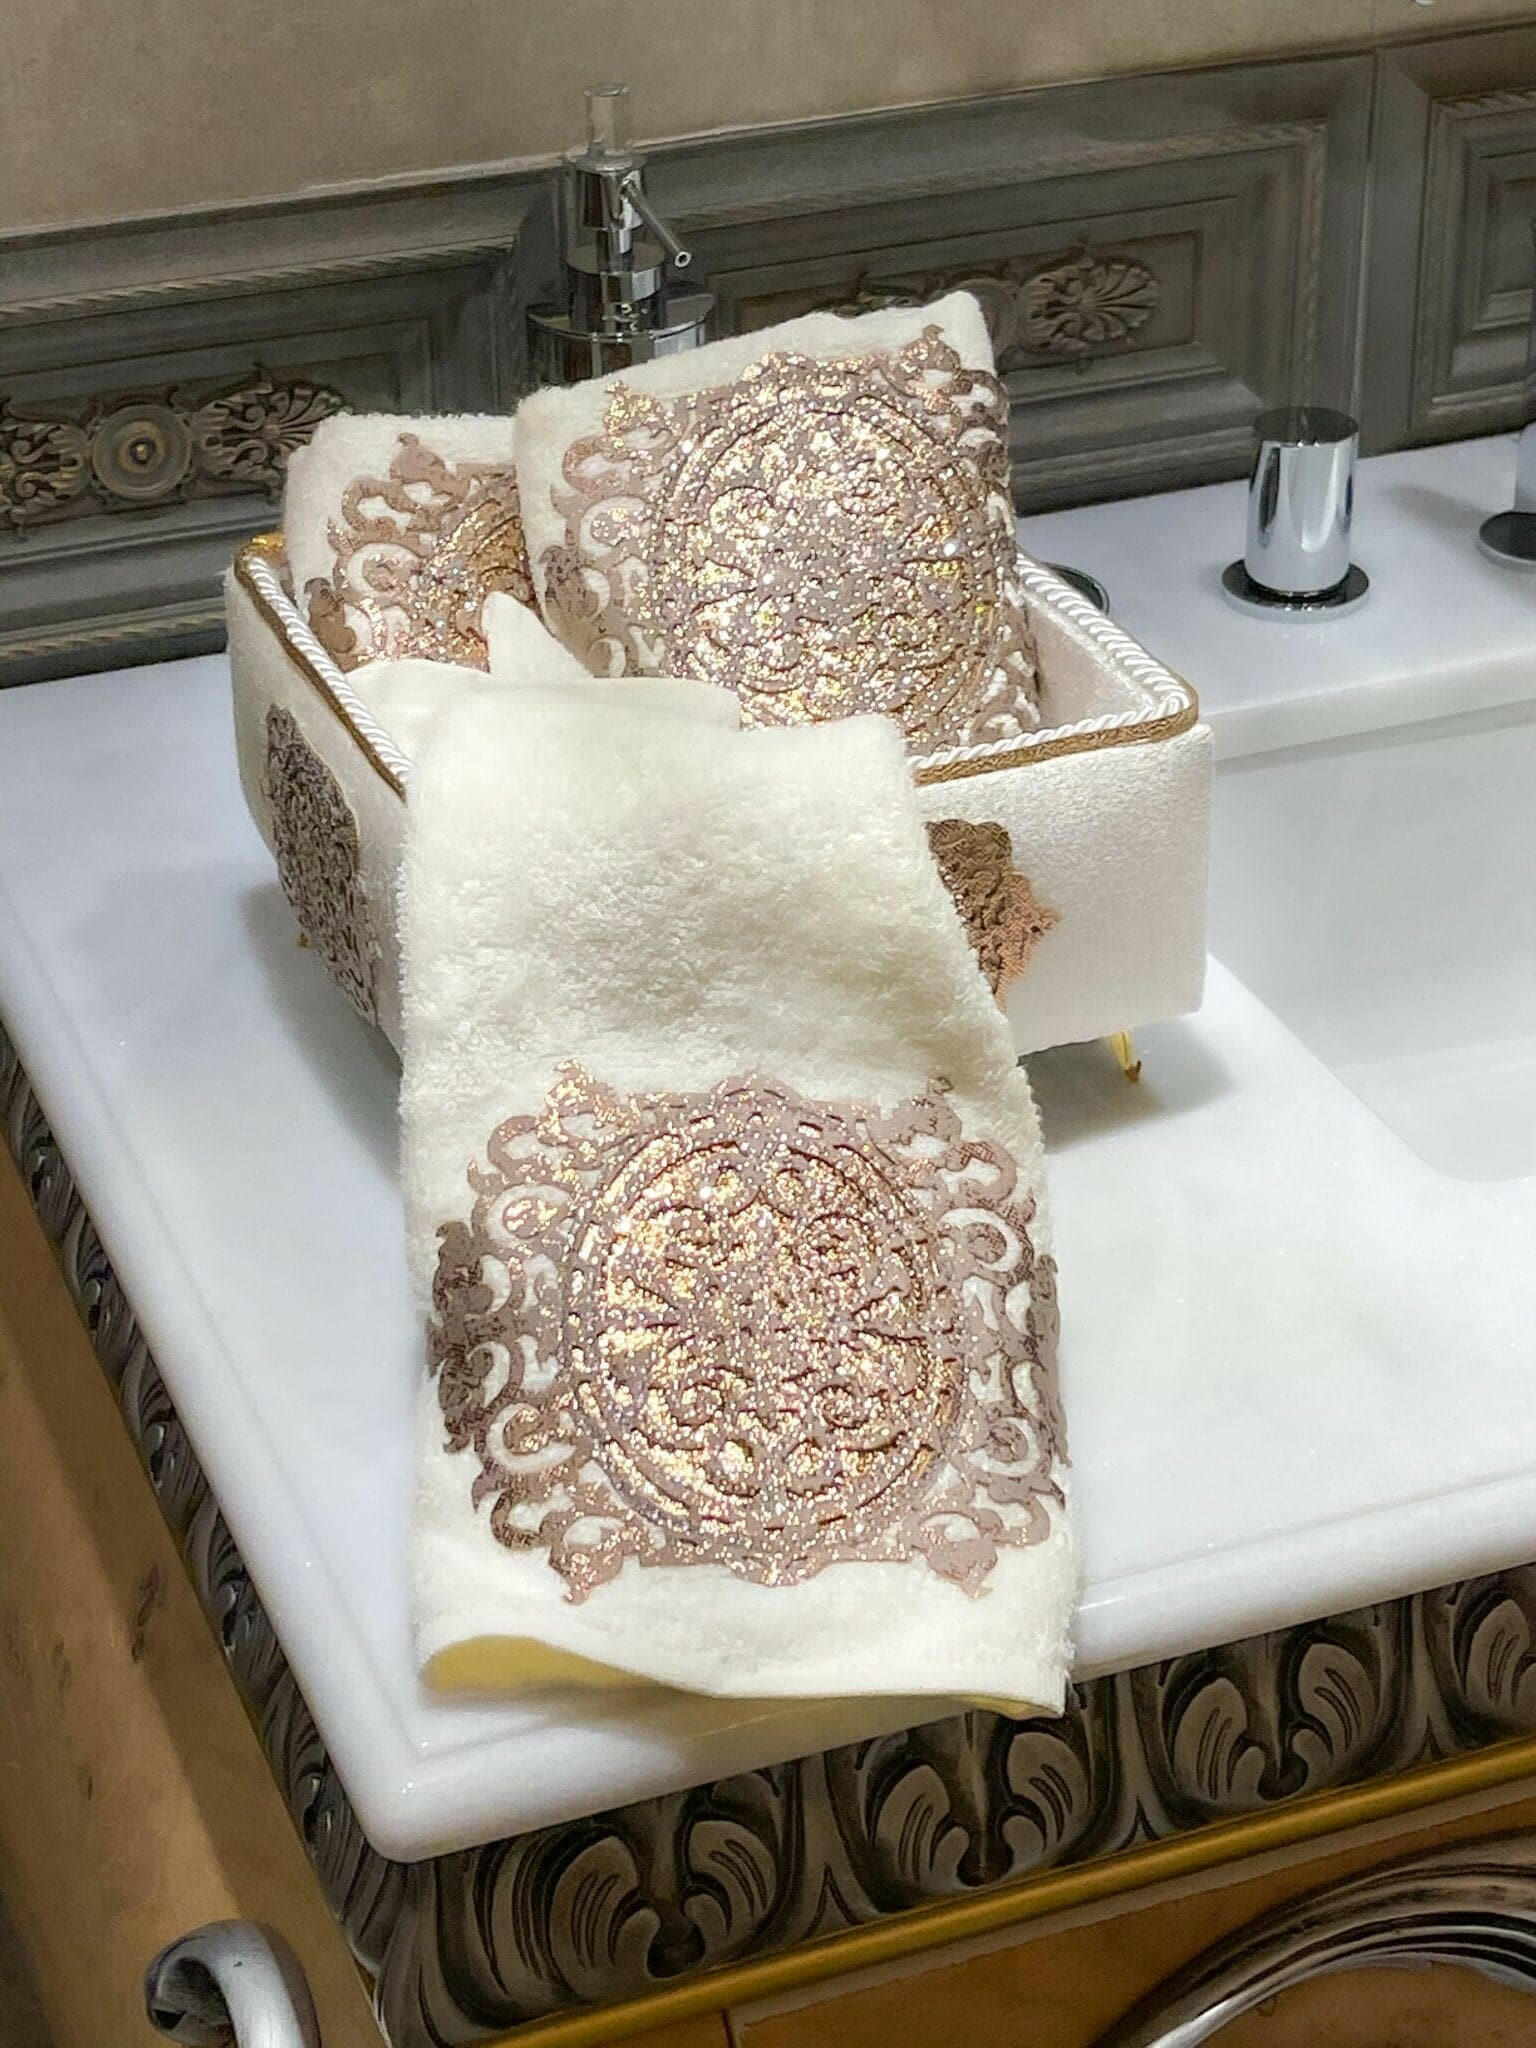 Ruya Decorative Towel Box Set, Velvet Luxury Bathroom Copper & Cream Color Towel Box Set by Creative Home